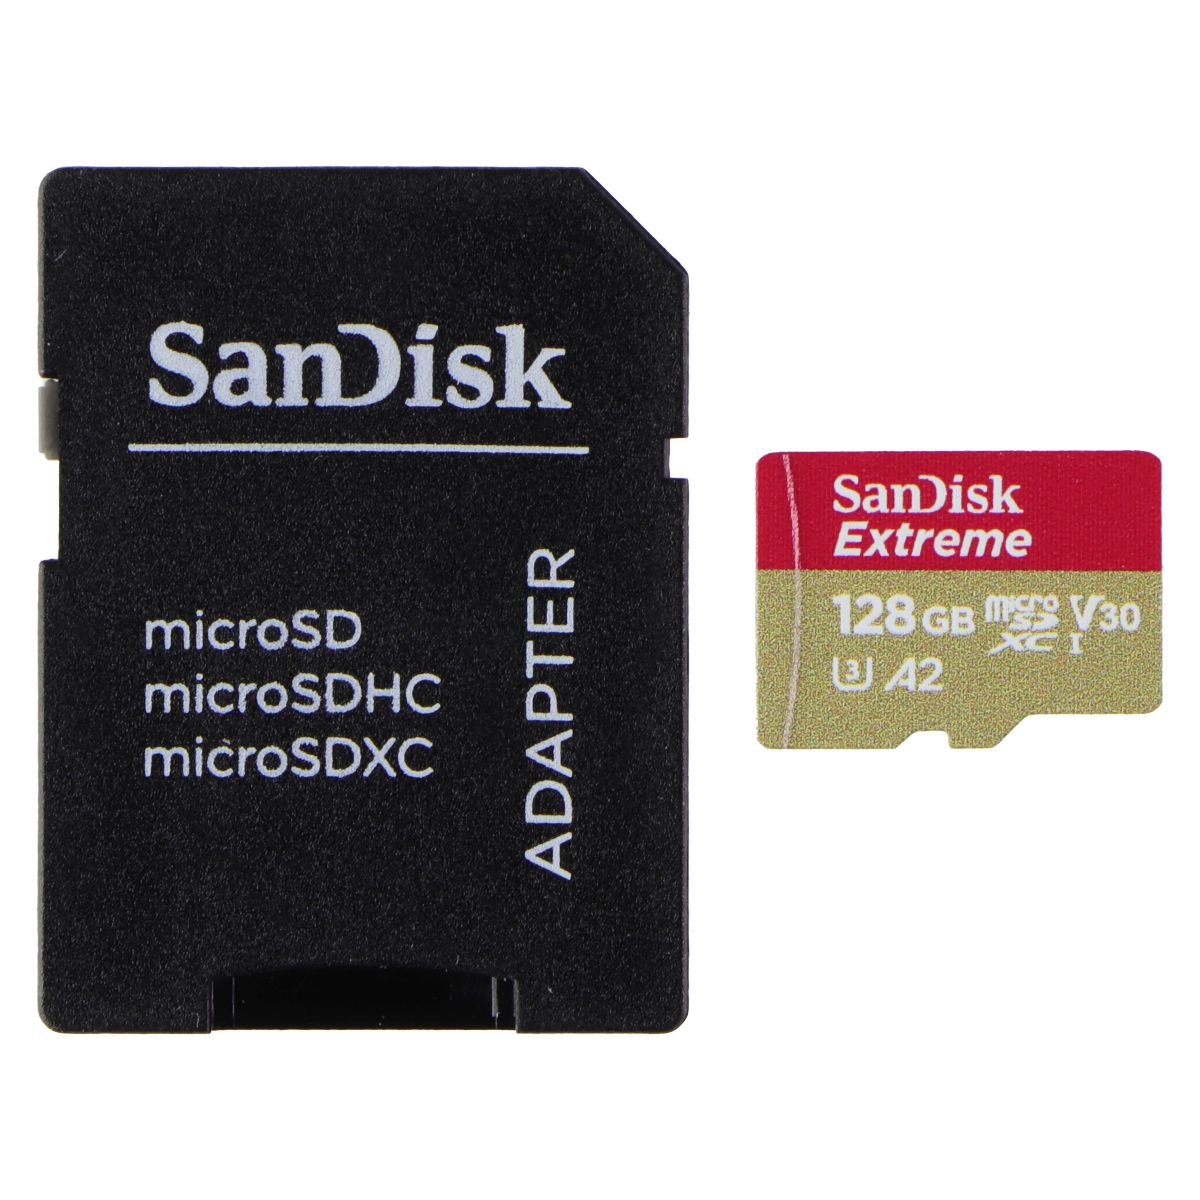 SanDisk (128GB) Extreme microSDXC UHS-I Memory Card with Adapter 4K UHD